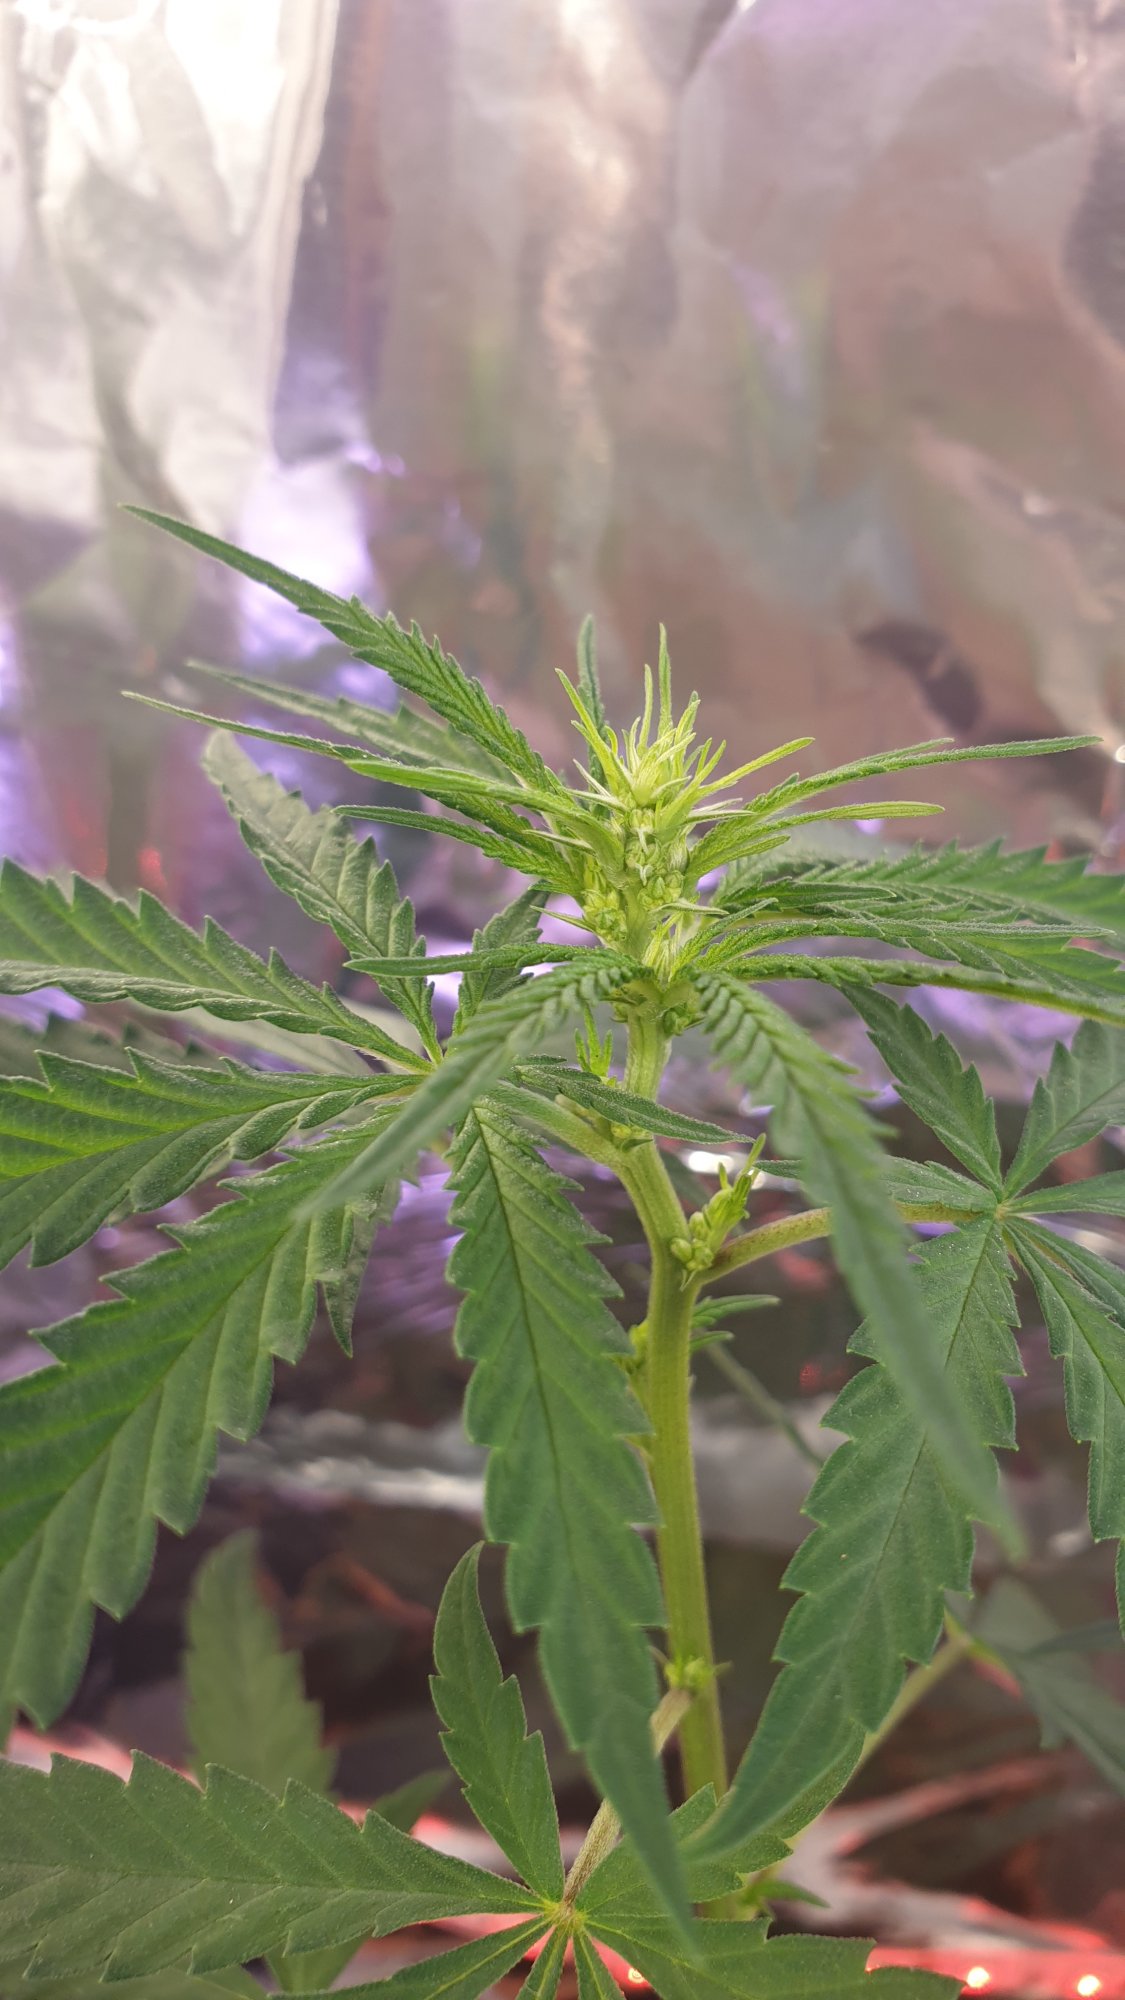 Male or female cannabis plants